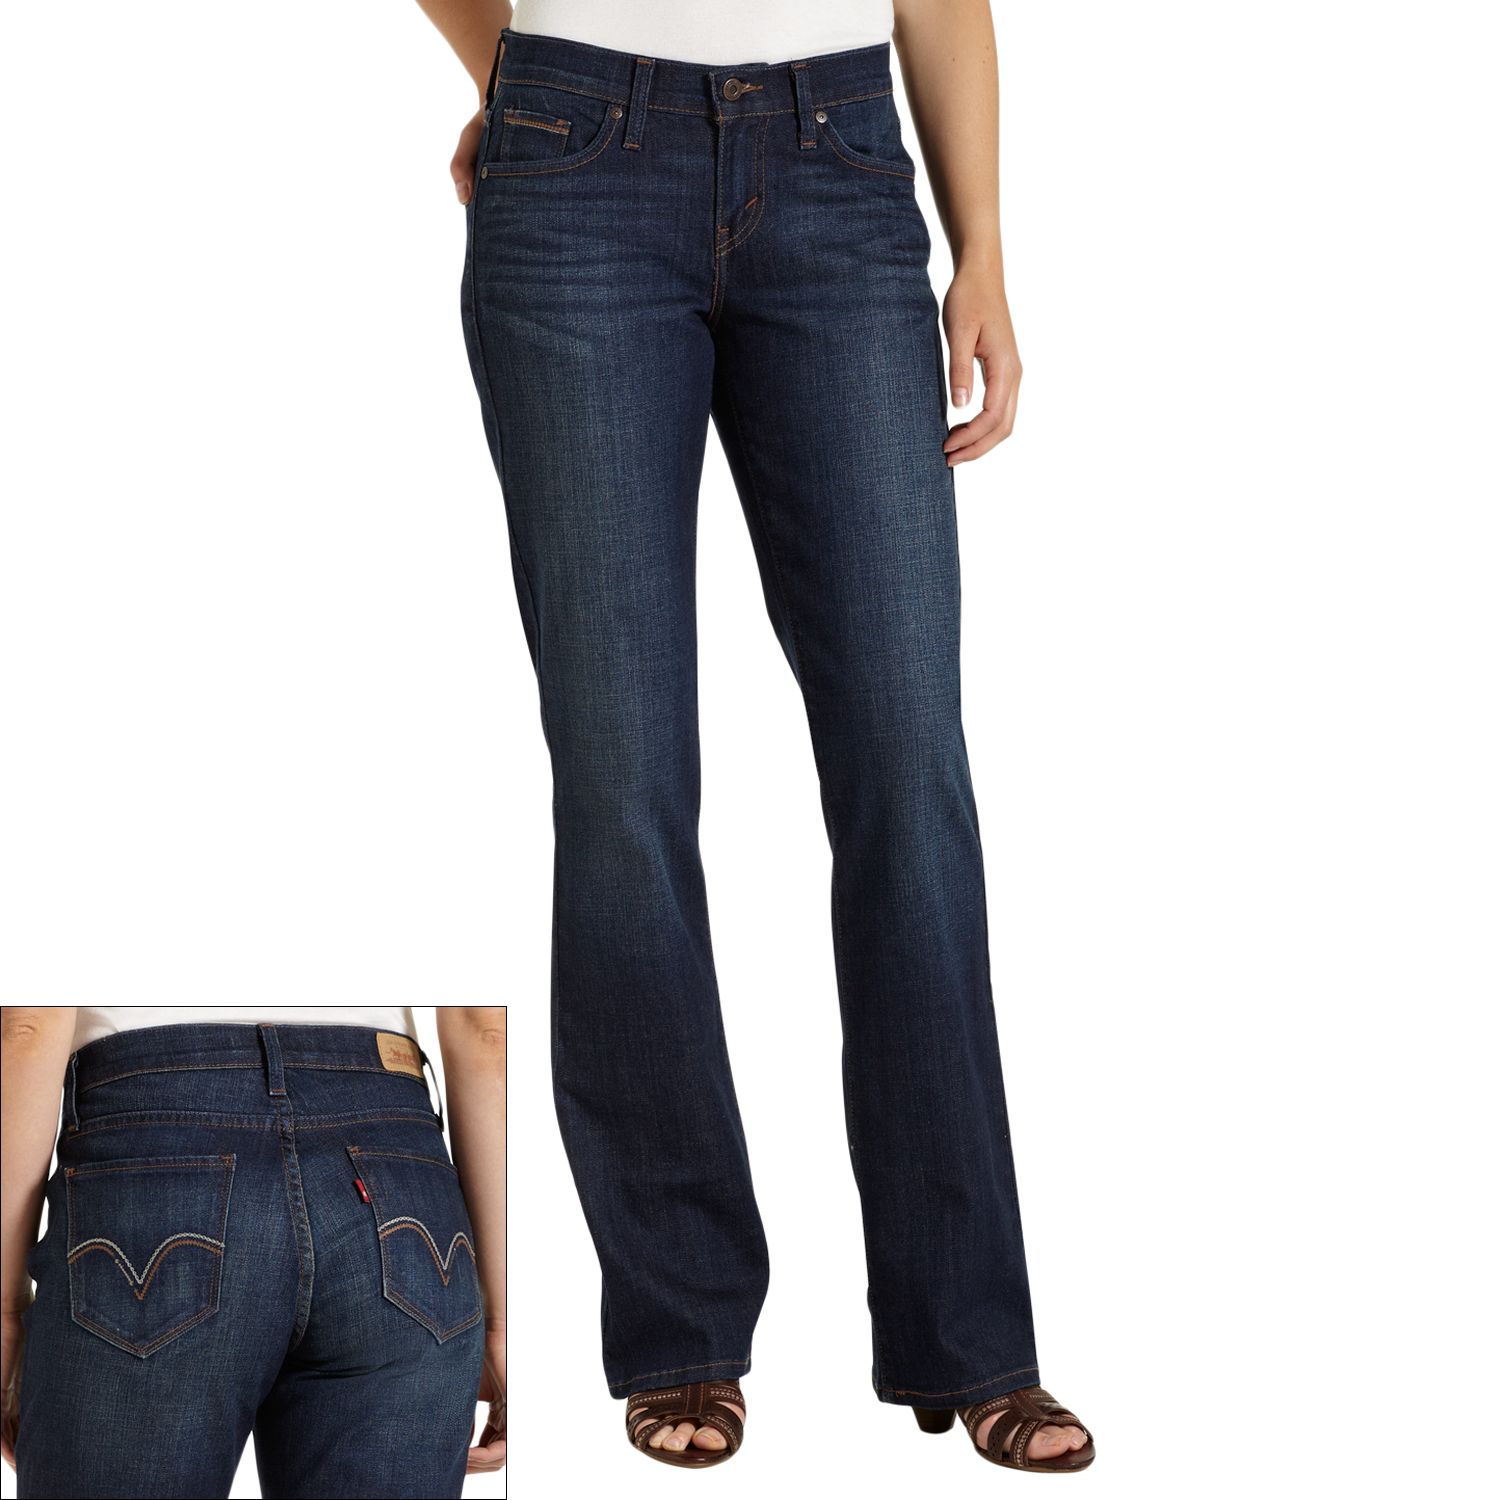 Levi's 529 Curvy Bootcut Jeans - Women's